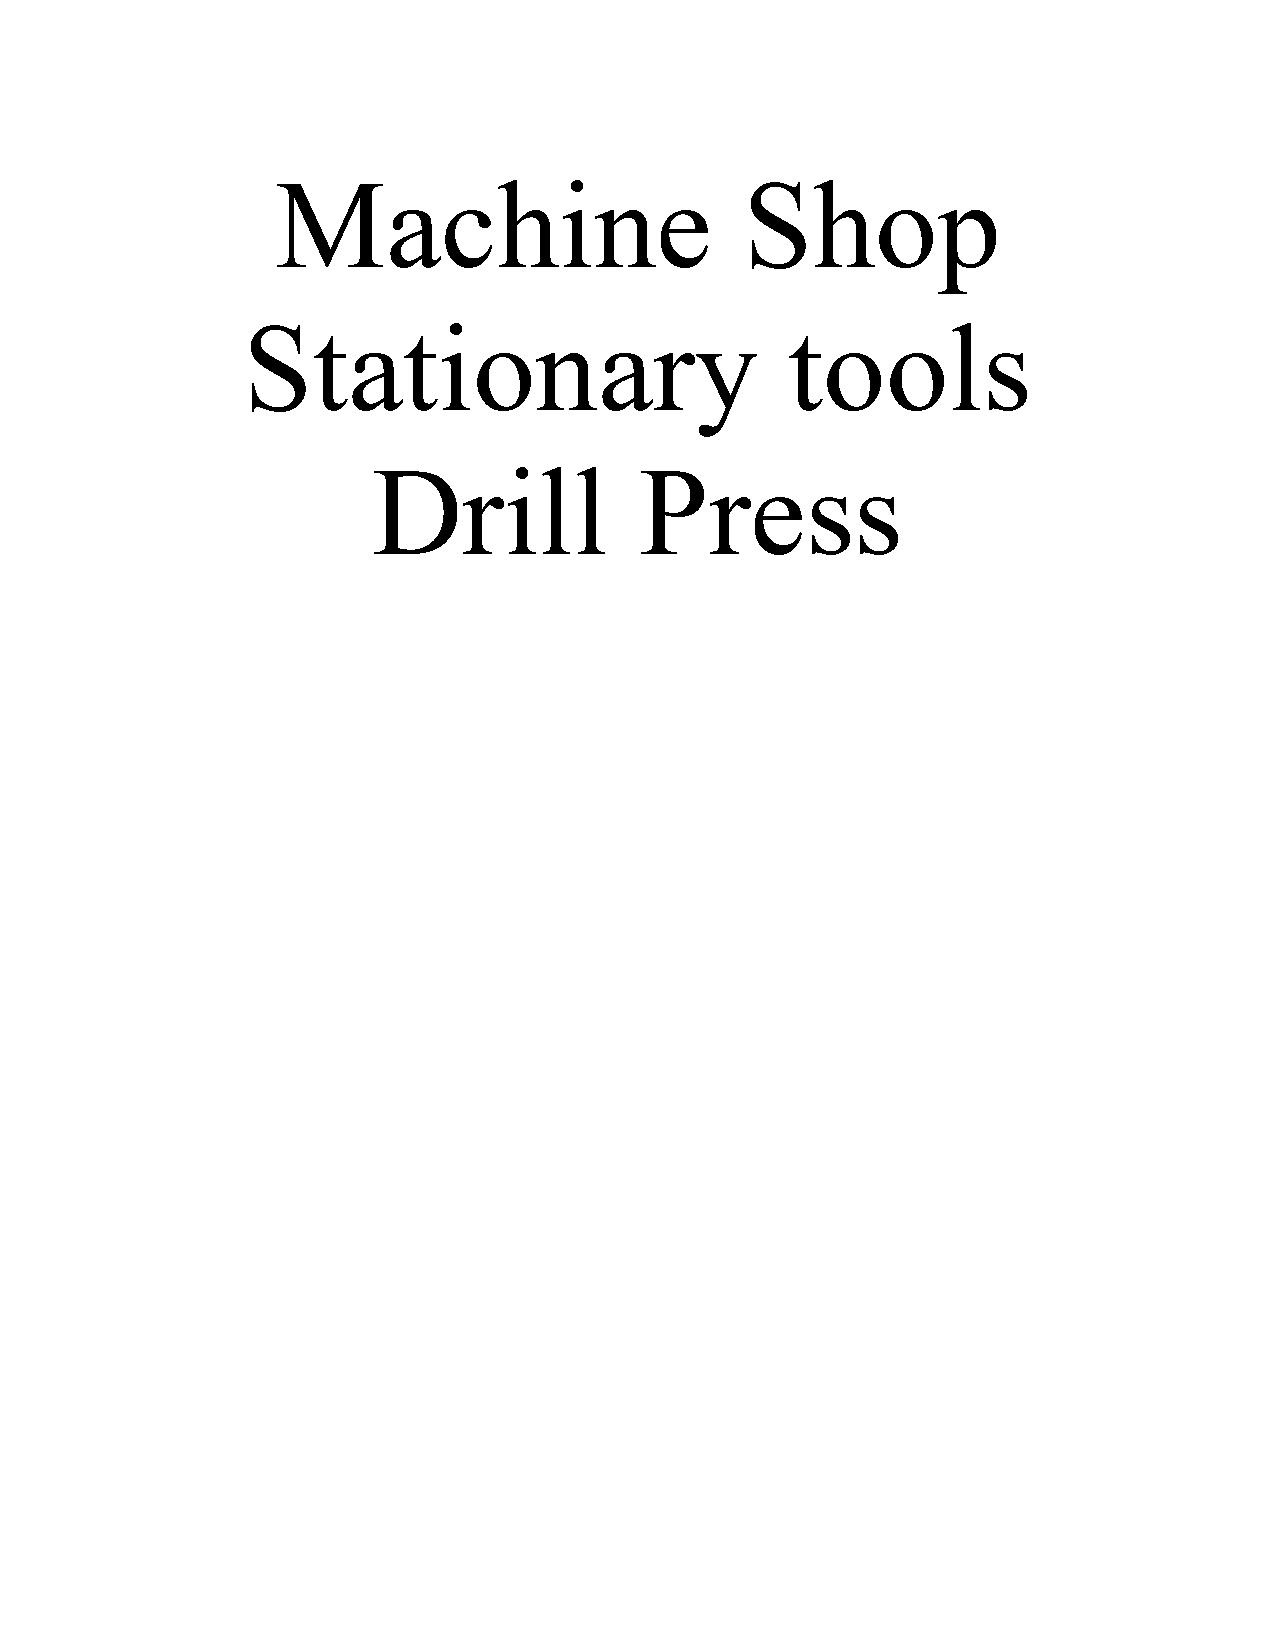 Machine Stationary Drill Press.pdf